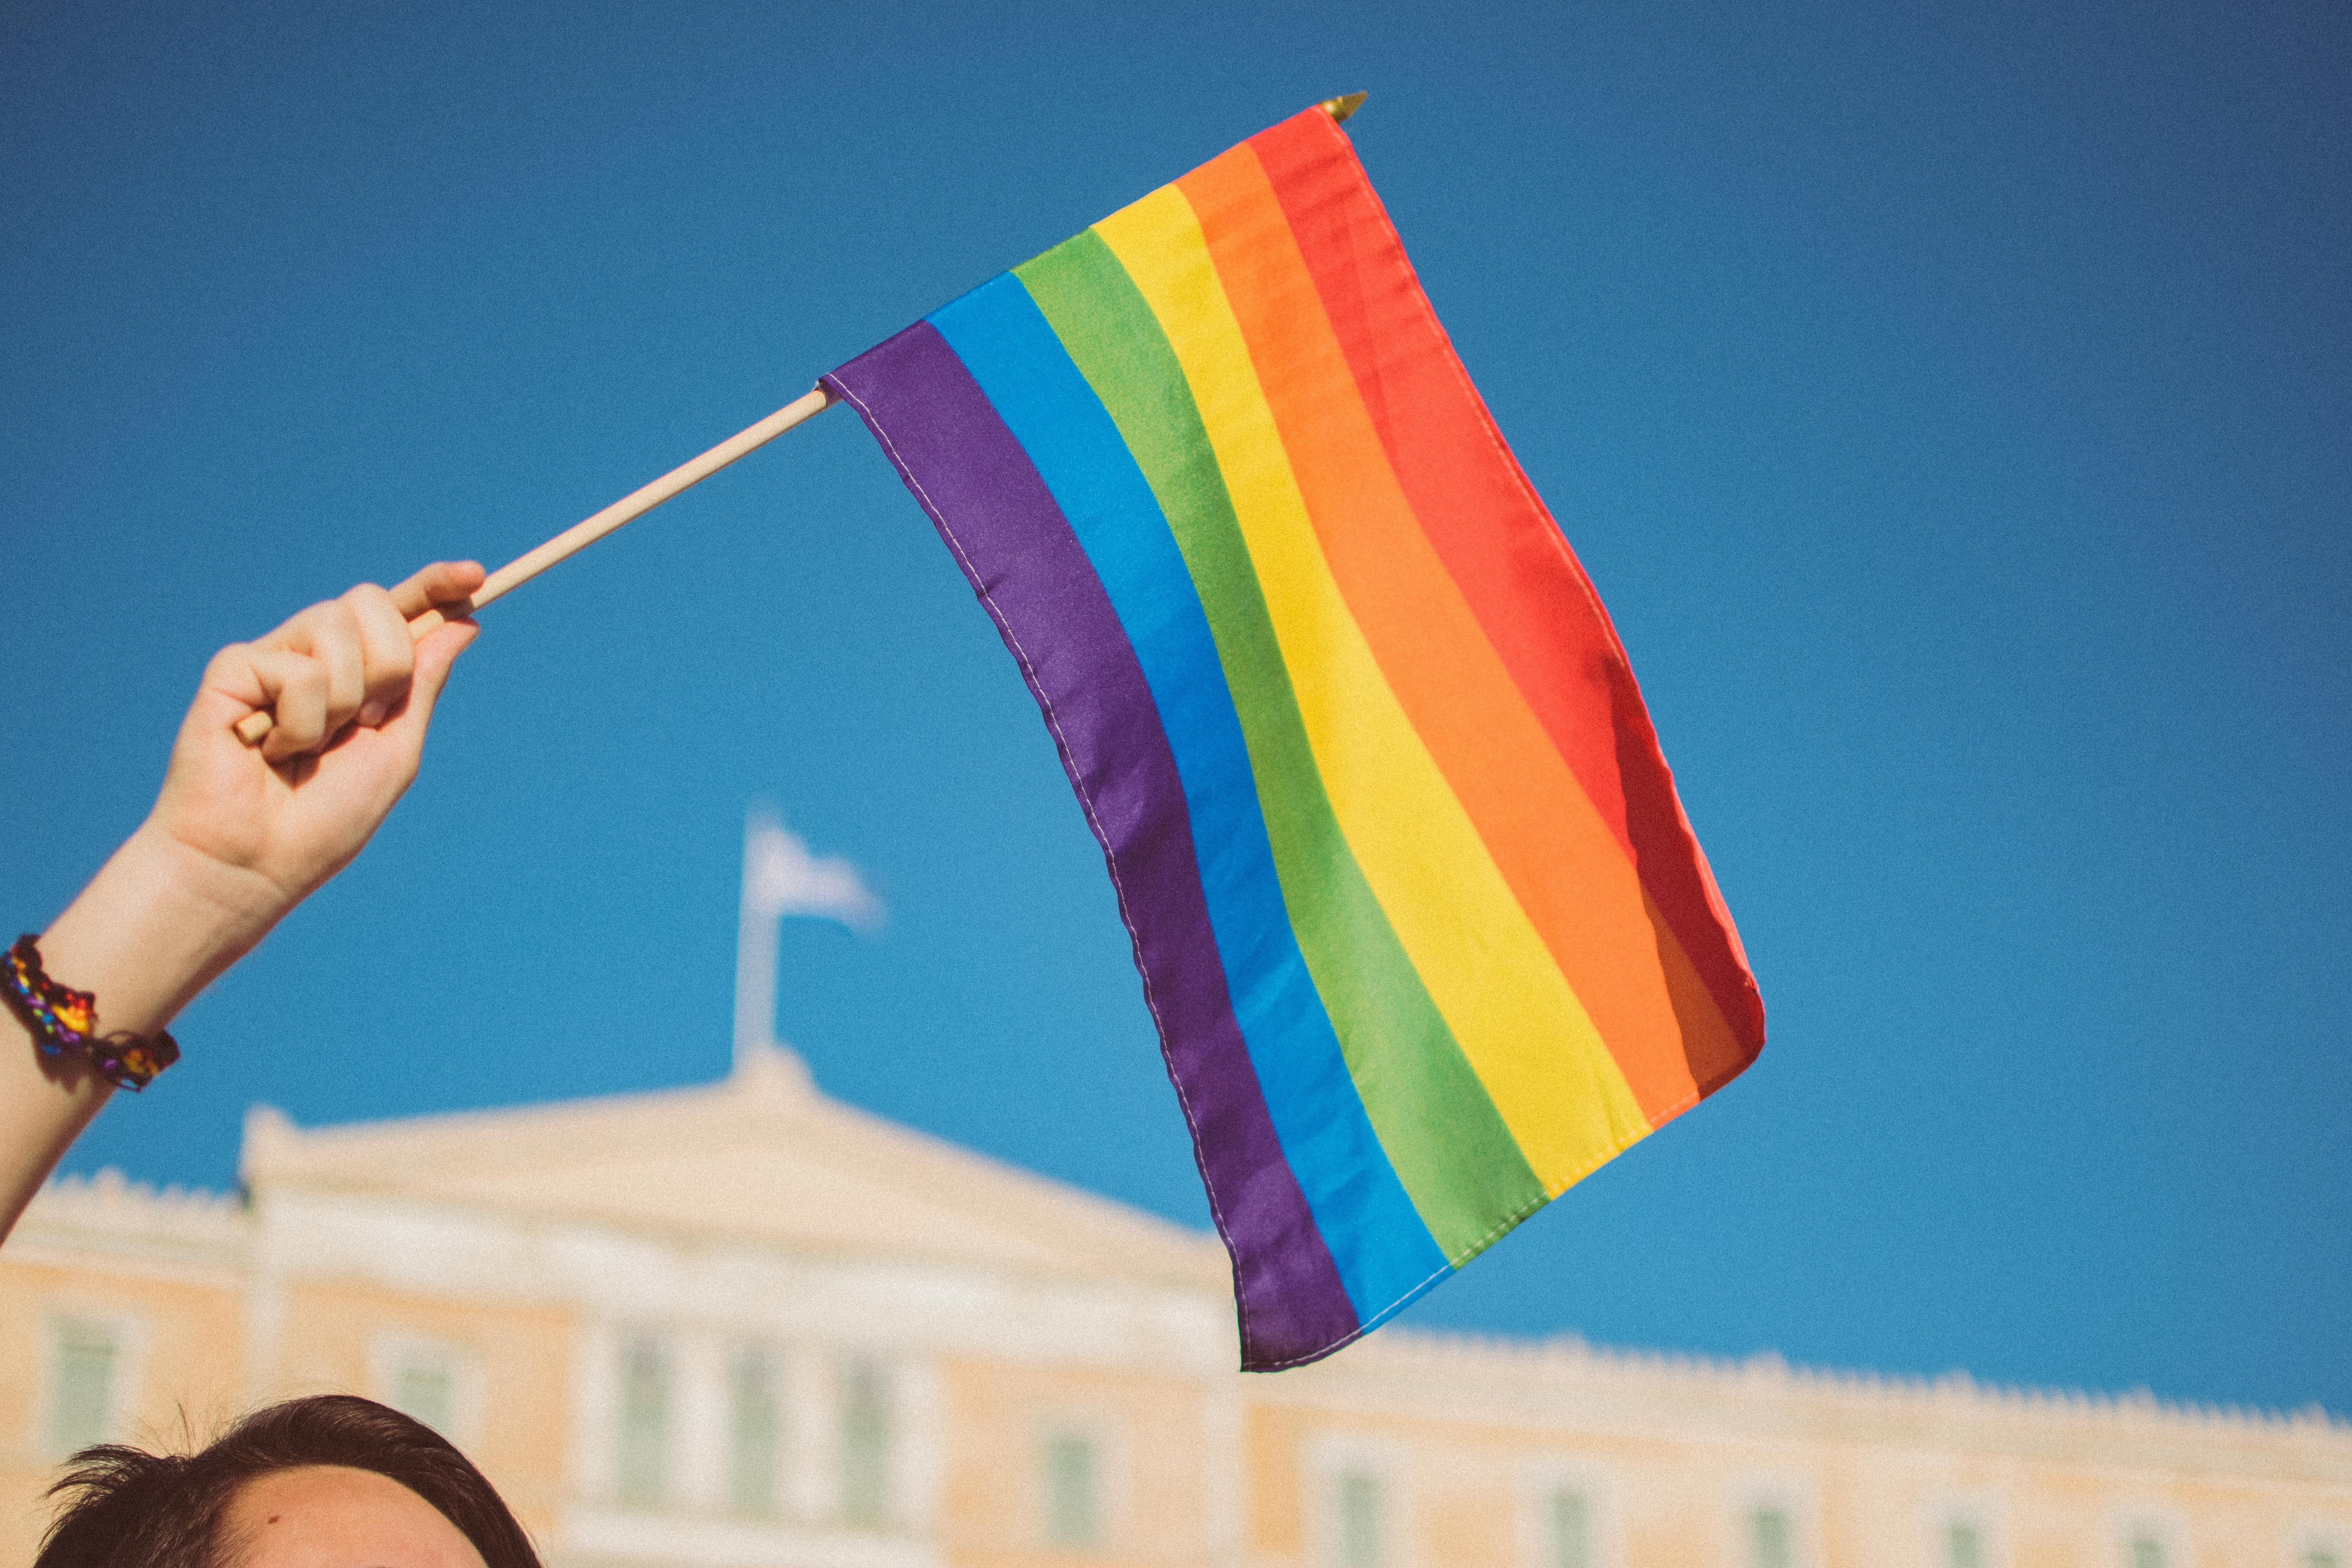 David Clarenbach on the 40th Anniversary of Anti-LGBTQ Discrimination Legislation